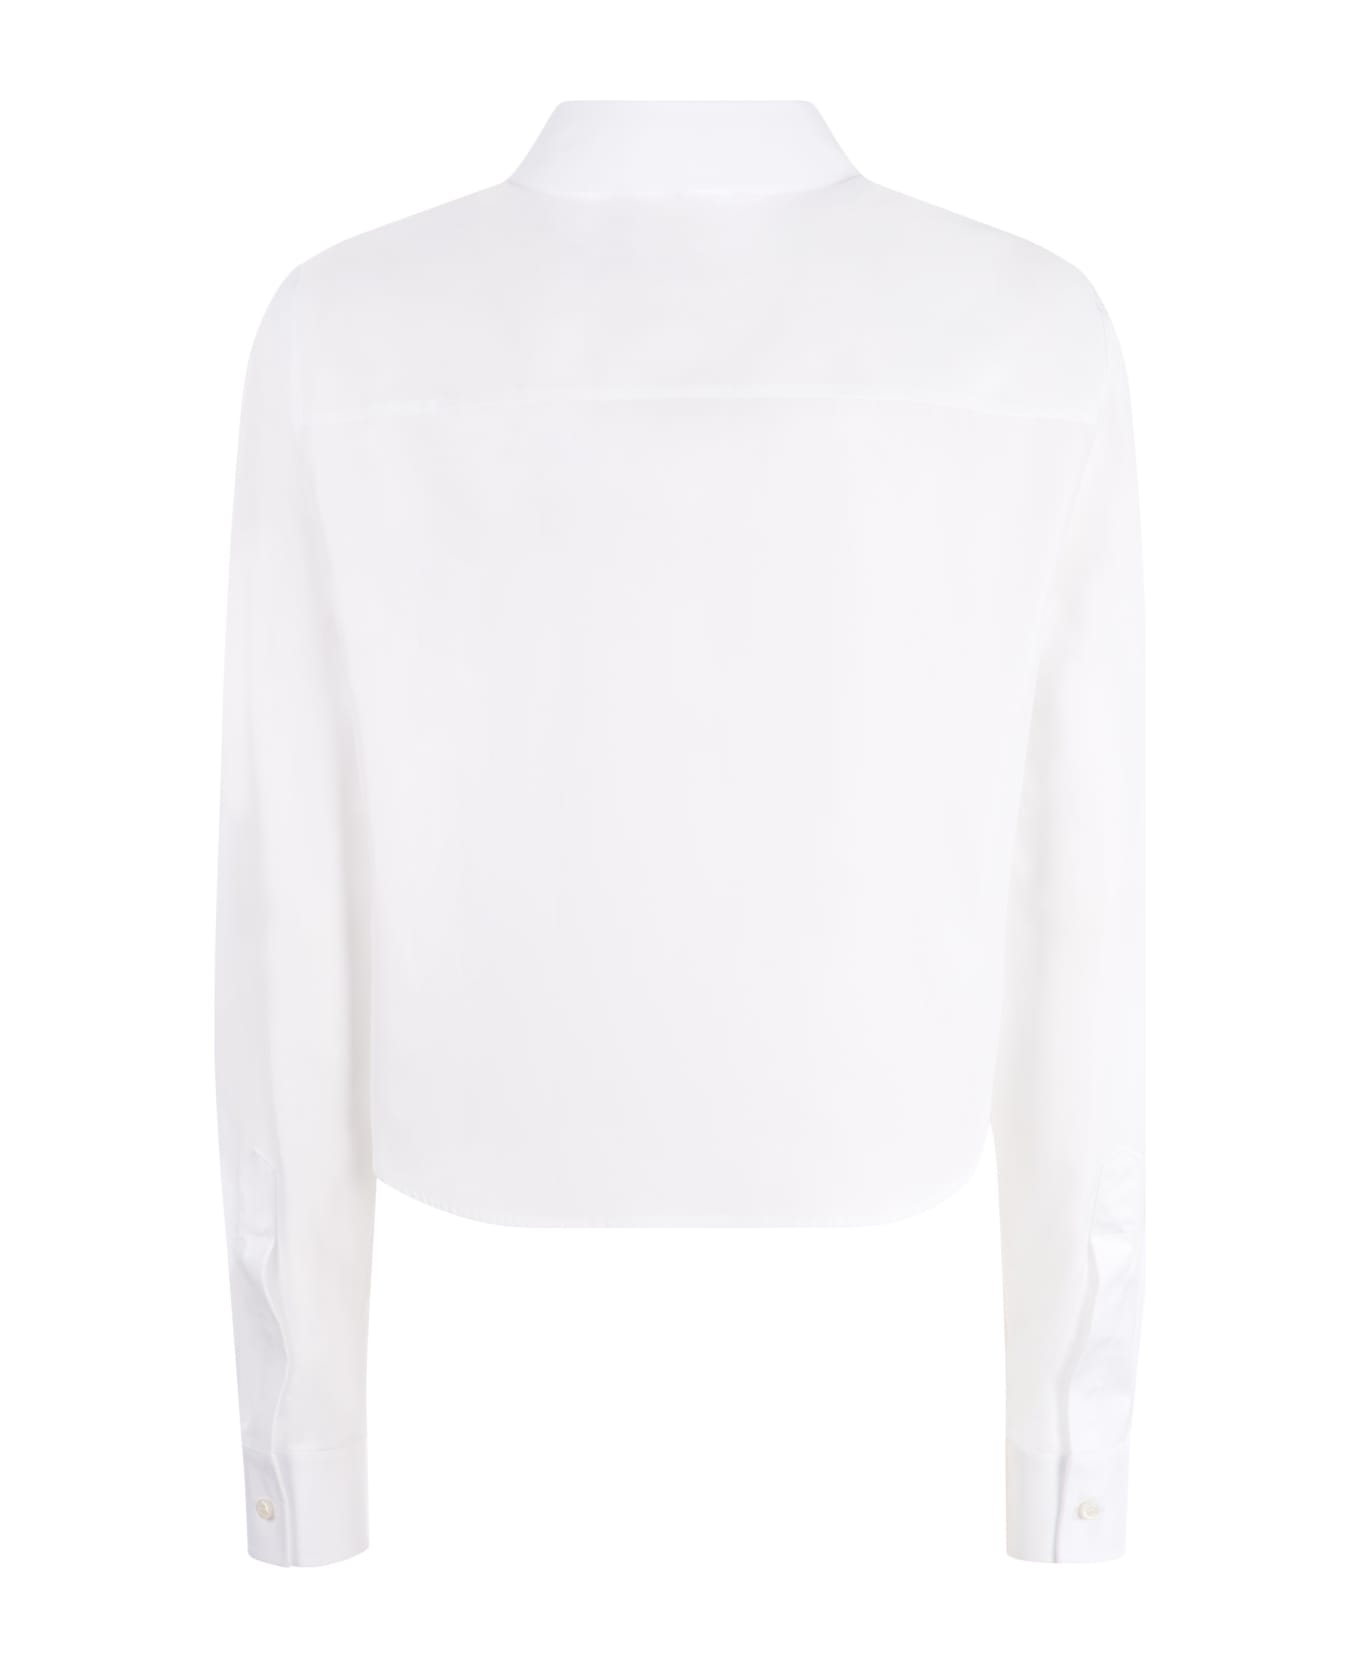 Dsquared2 Shirt Dsquared2 'icon' In Cotton - Bianco シャツ